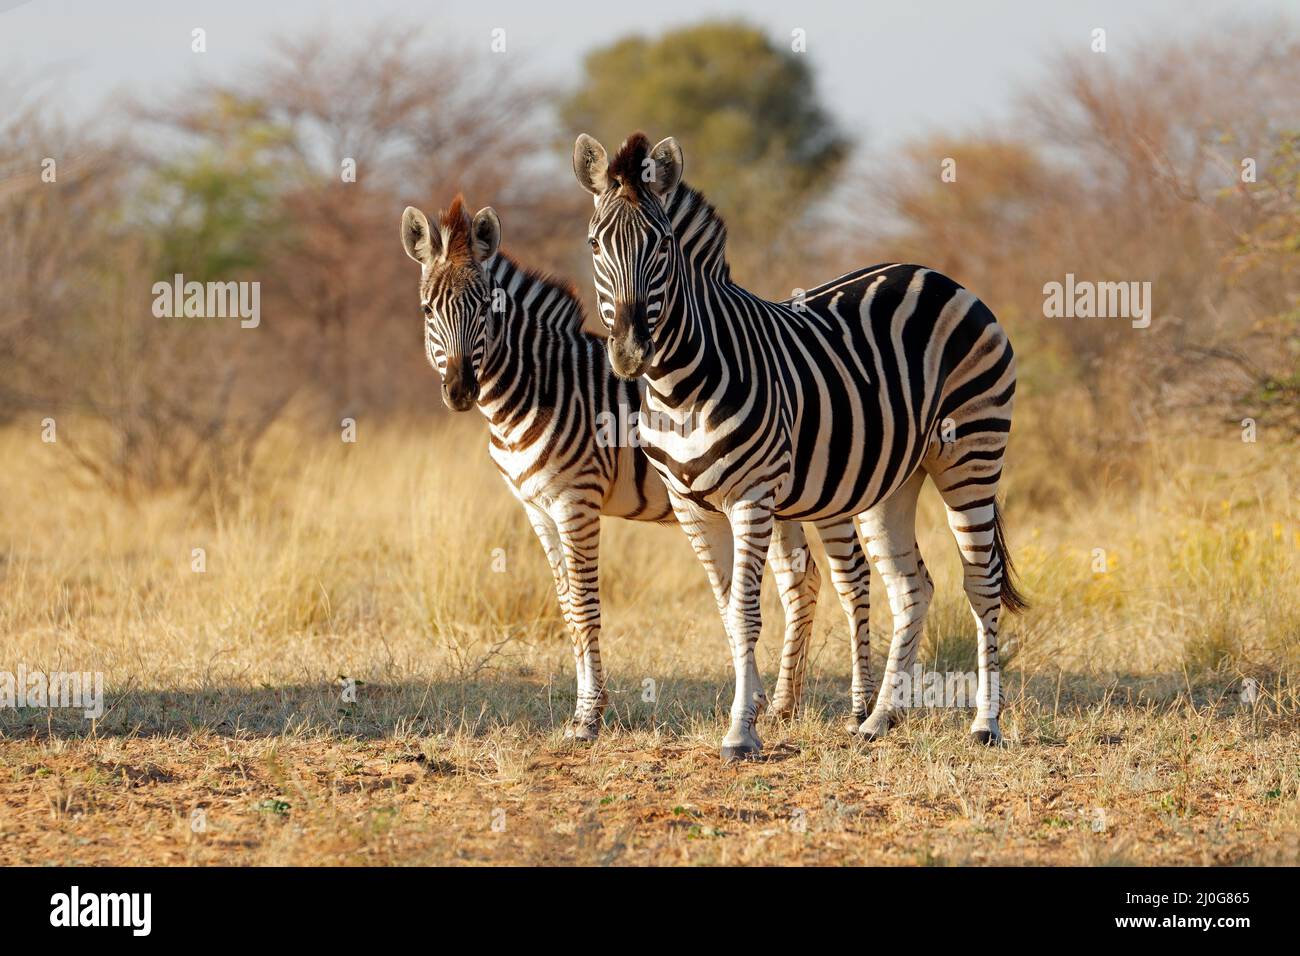 Two plains zebras (Equus burchelli) in natural habitat, South Africa Stock Photo